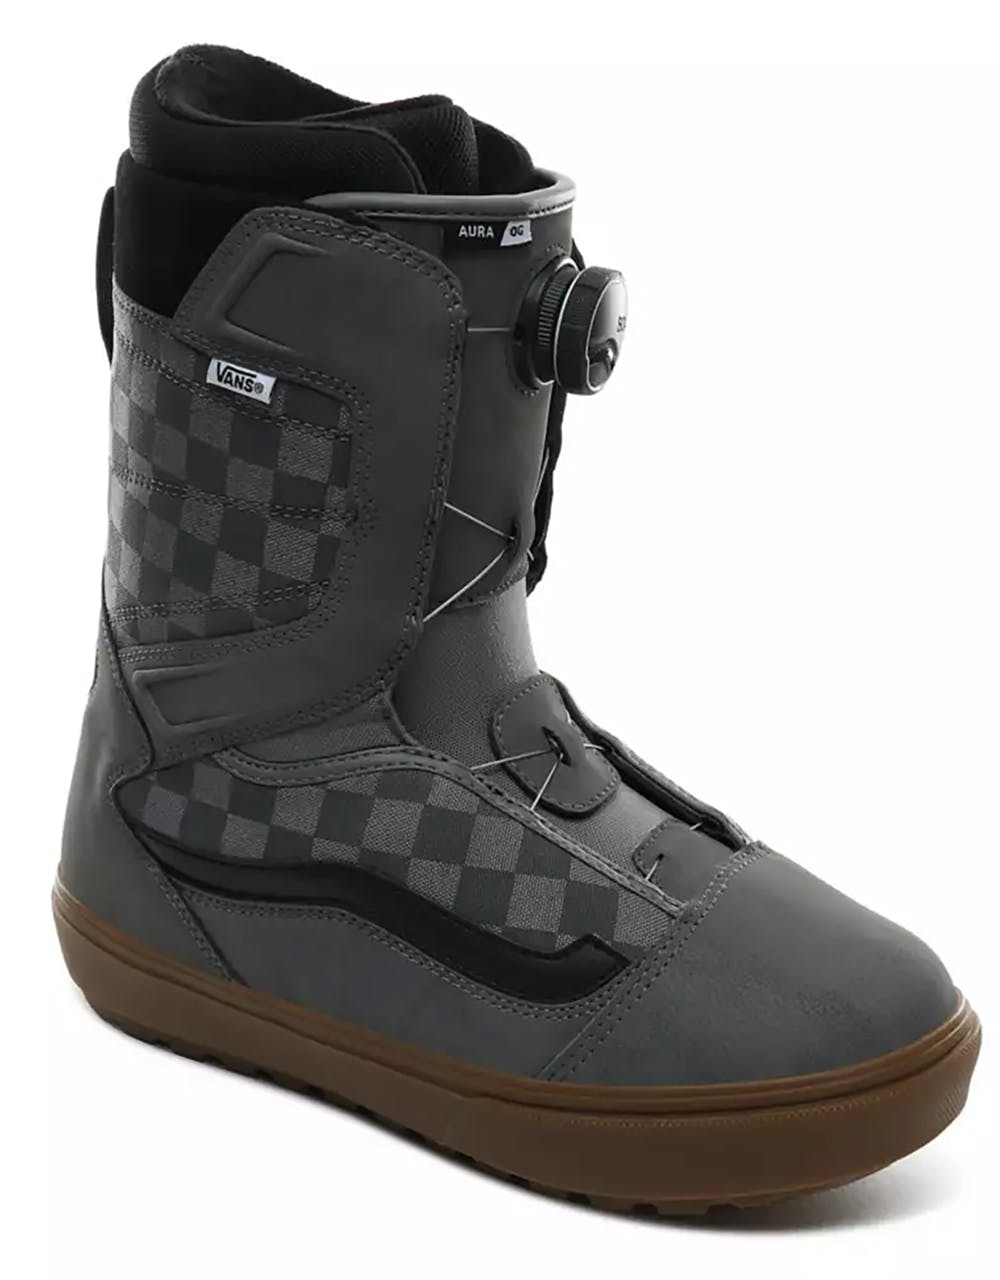 Vans Aura OG 2020 Snowboard Boots - Grey/Gum